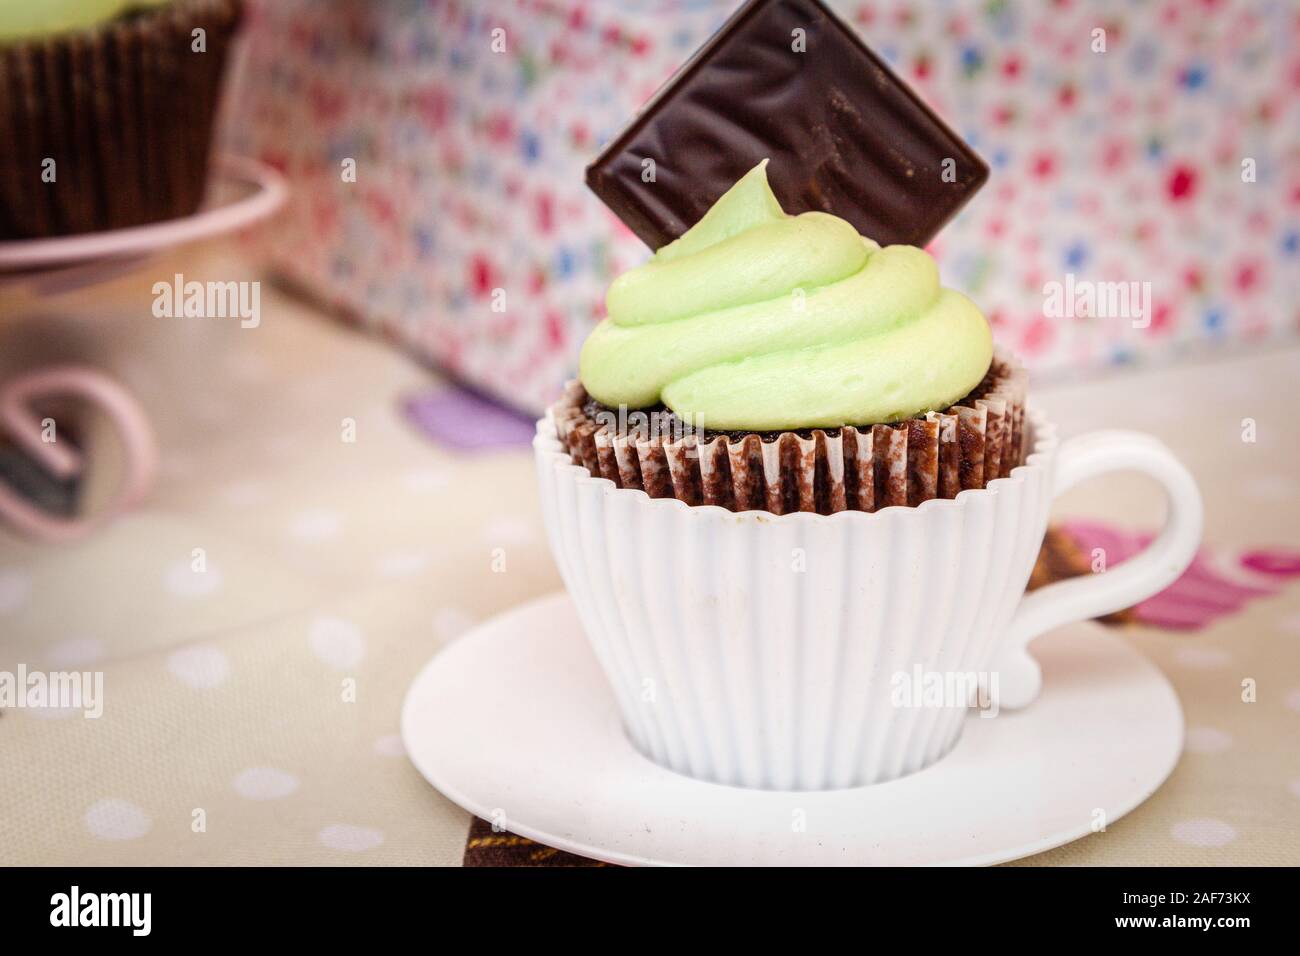 cupcake on display Stock Photo